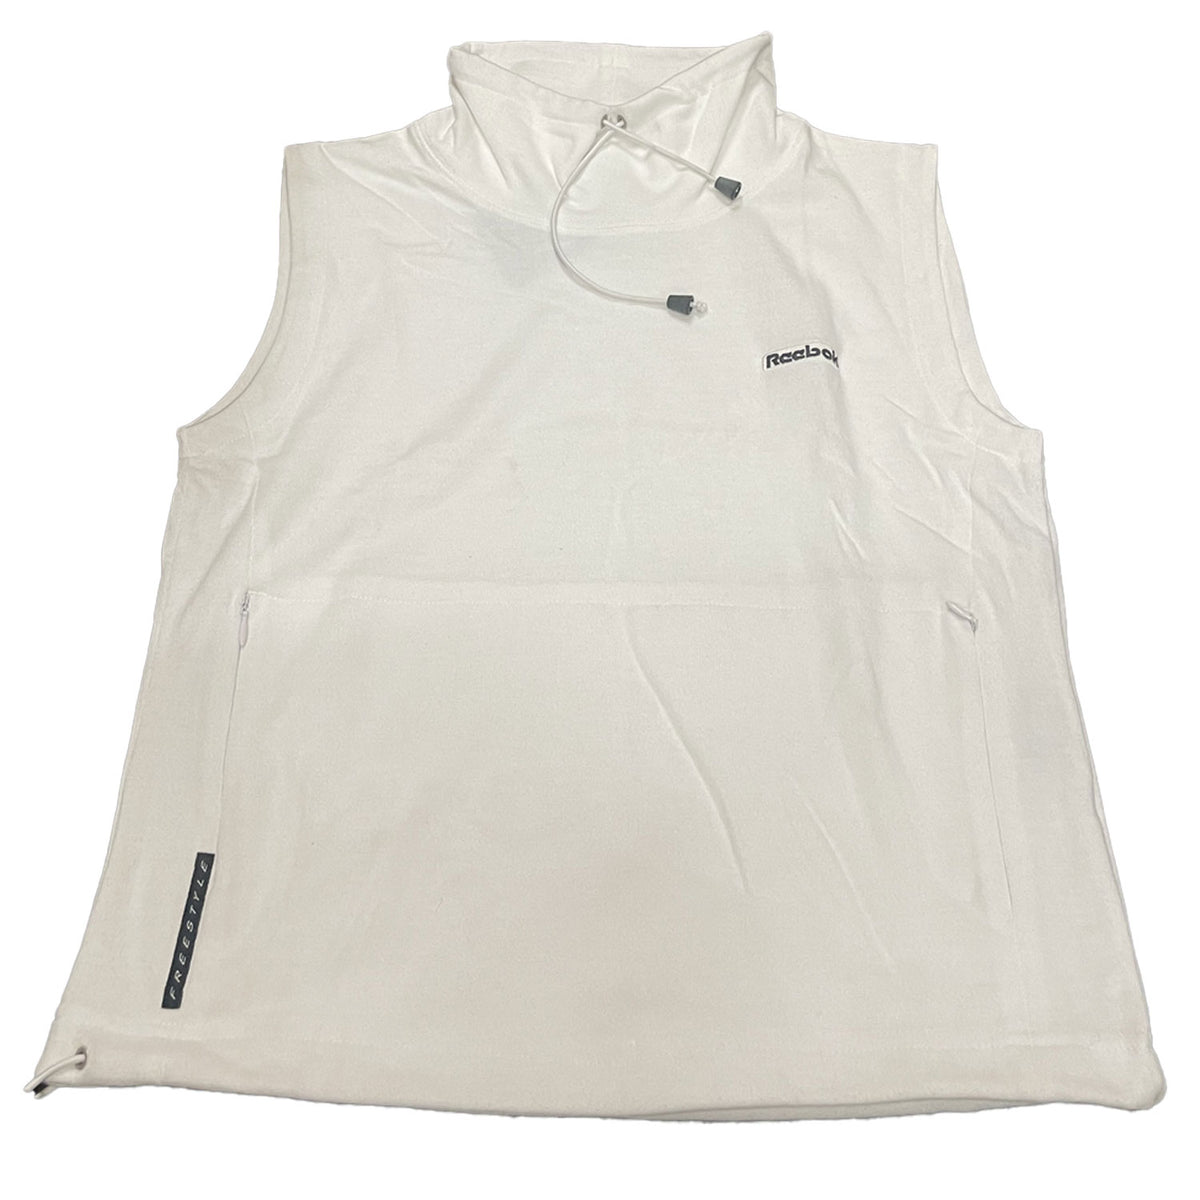 Reebok Womens Freestyle Sleeveless High Neck Sweatshirt - White - UK Size 12